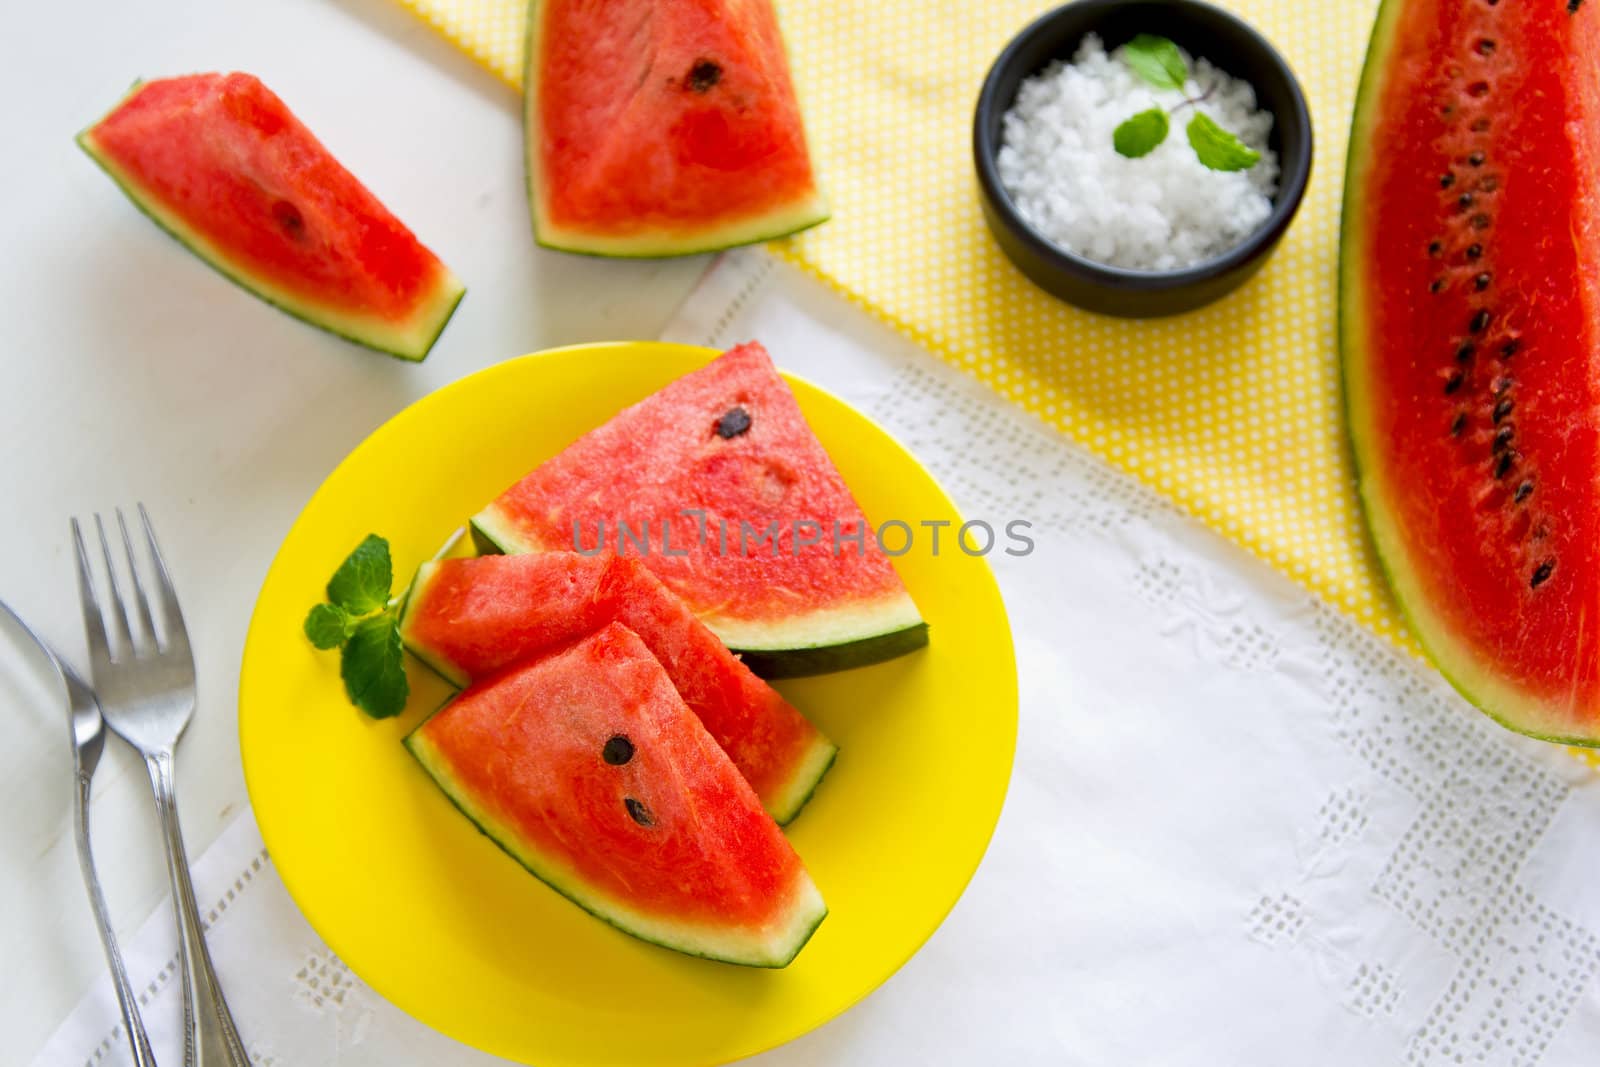 Watermelon by vanillaechoes